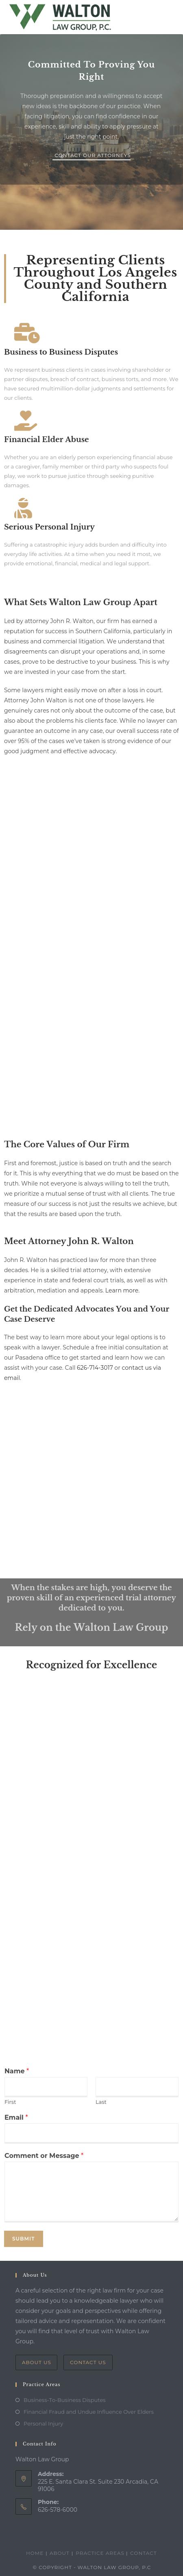 Walton Law Group - Pasadena CA Lawyers